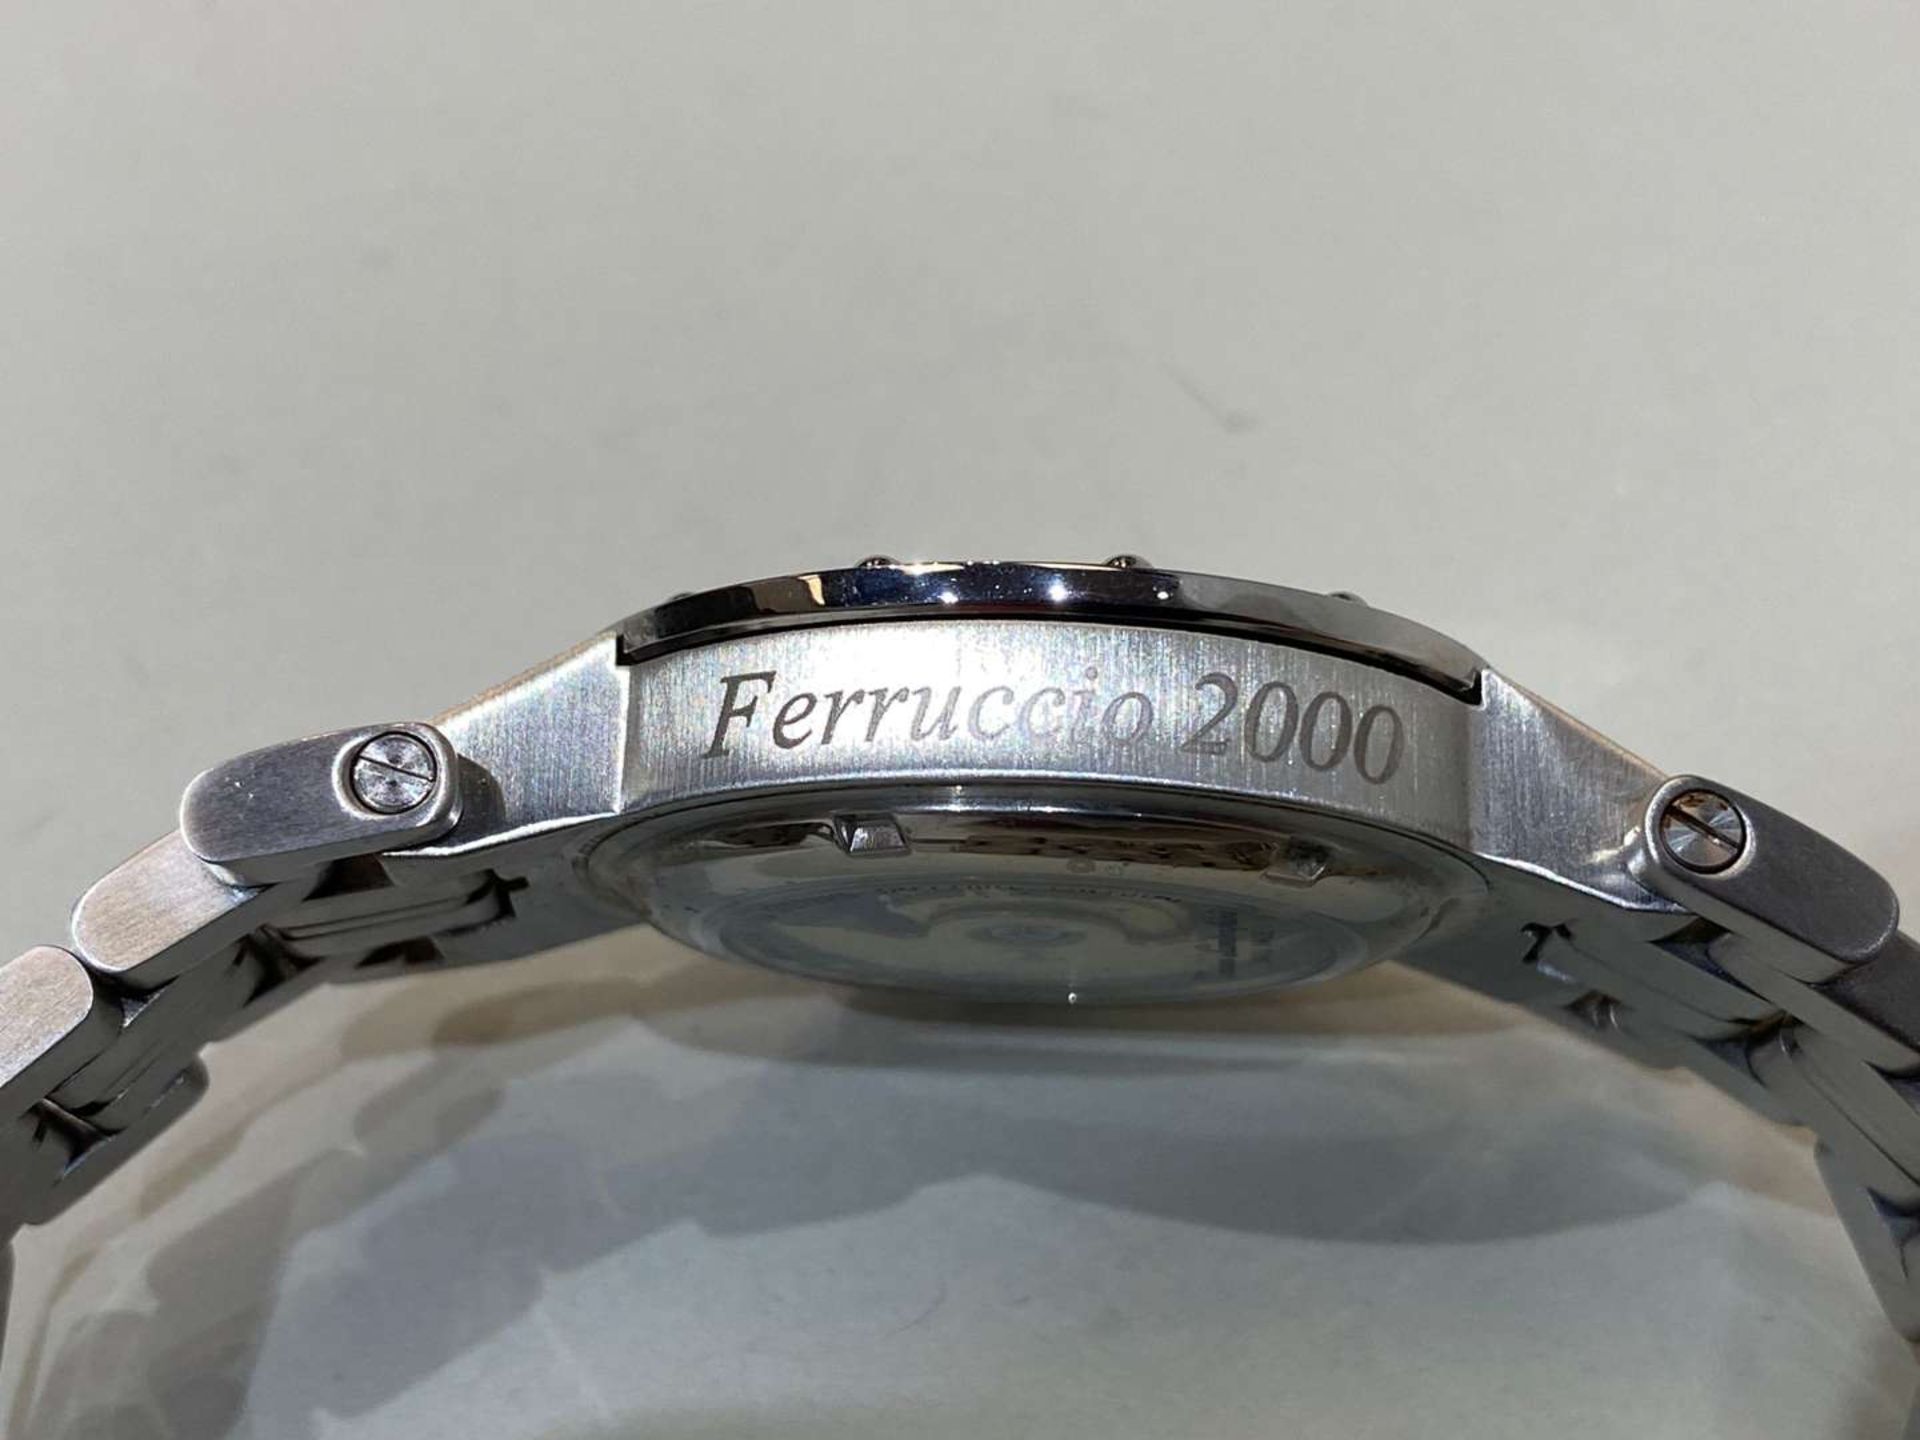 TONINO LAMBORGHINI, FERRUCCIO 2000, a stainless steel, automatic, centre seconds, calendar watch, - Image 4 of 10